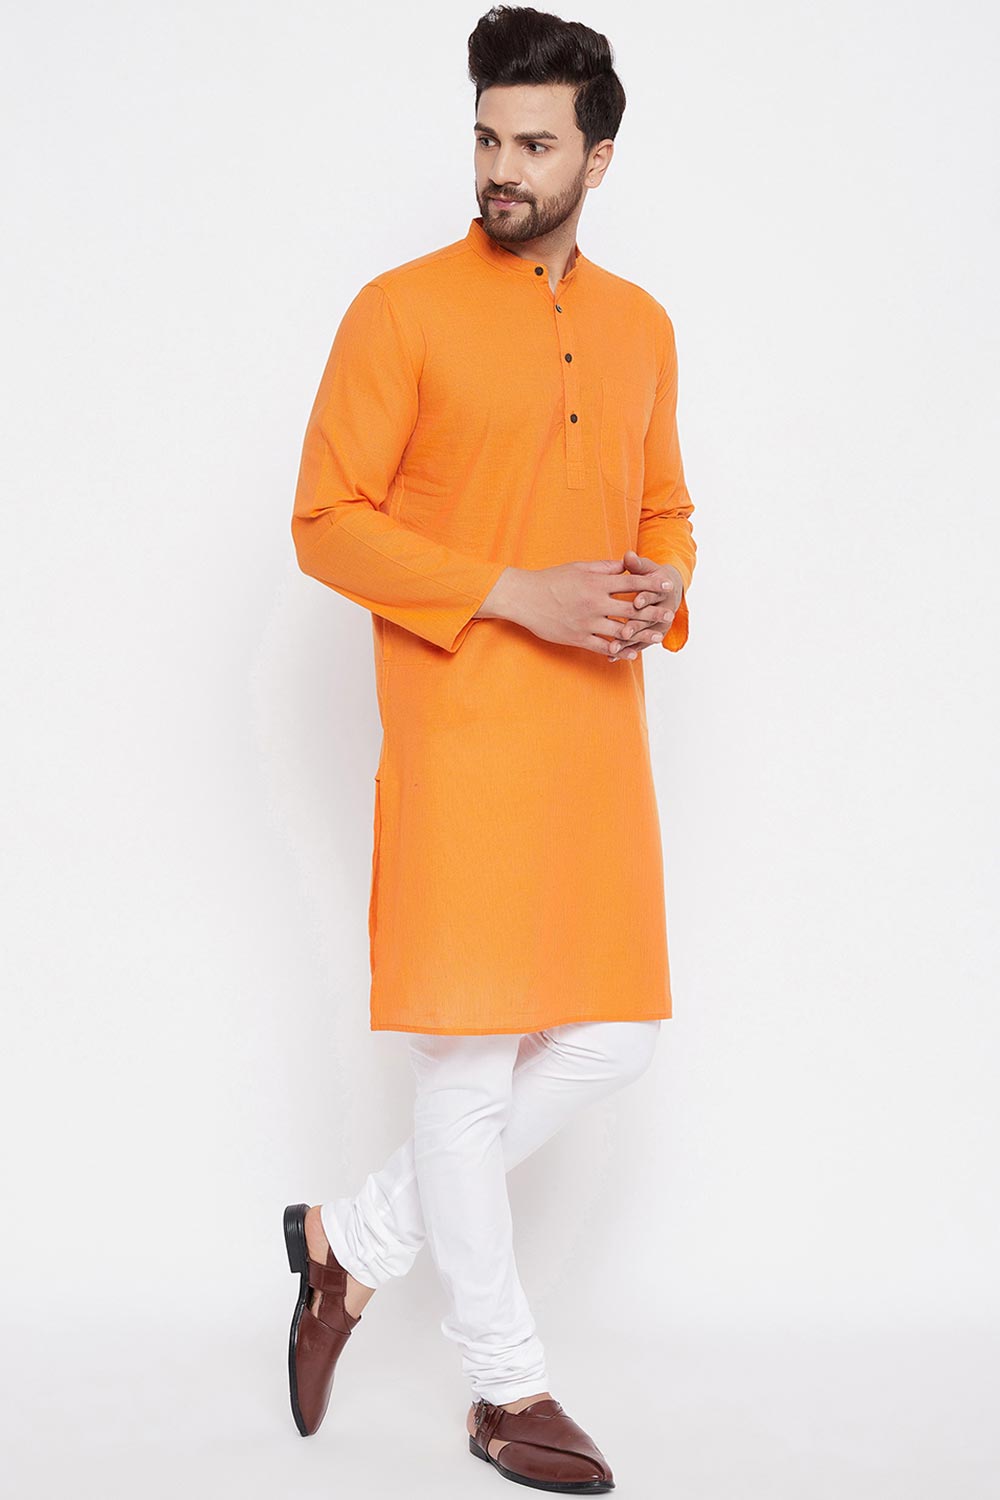 Shop Men's Blended Cotton Kurta in Orange